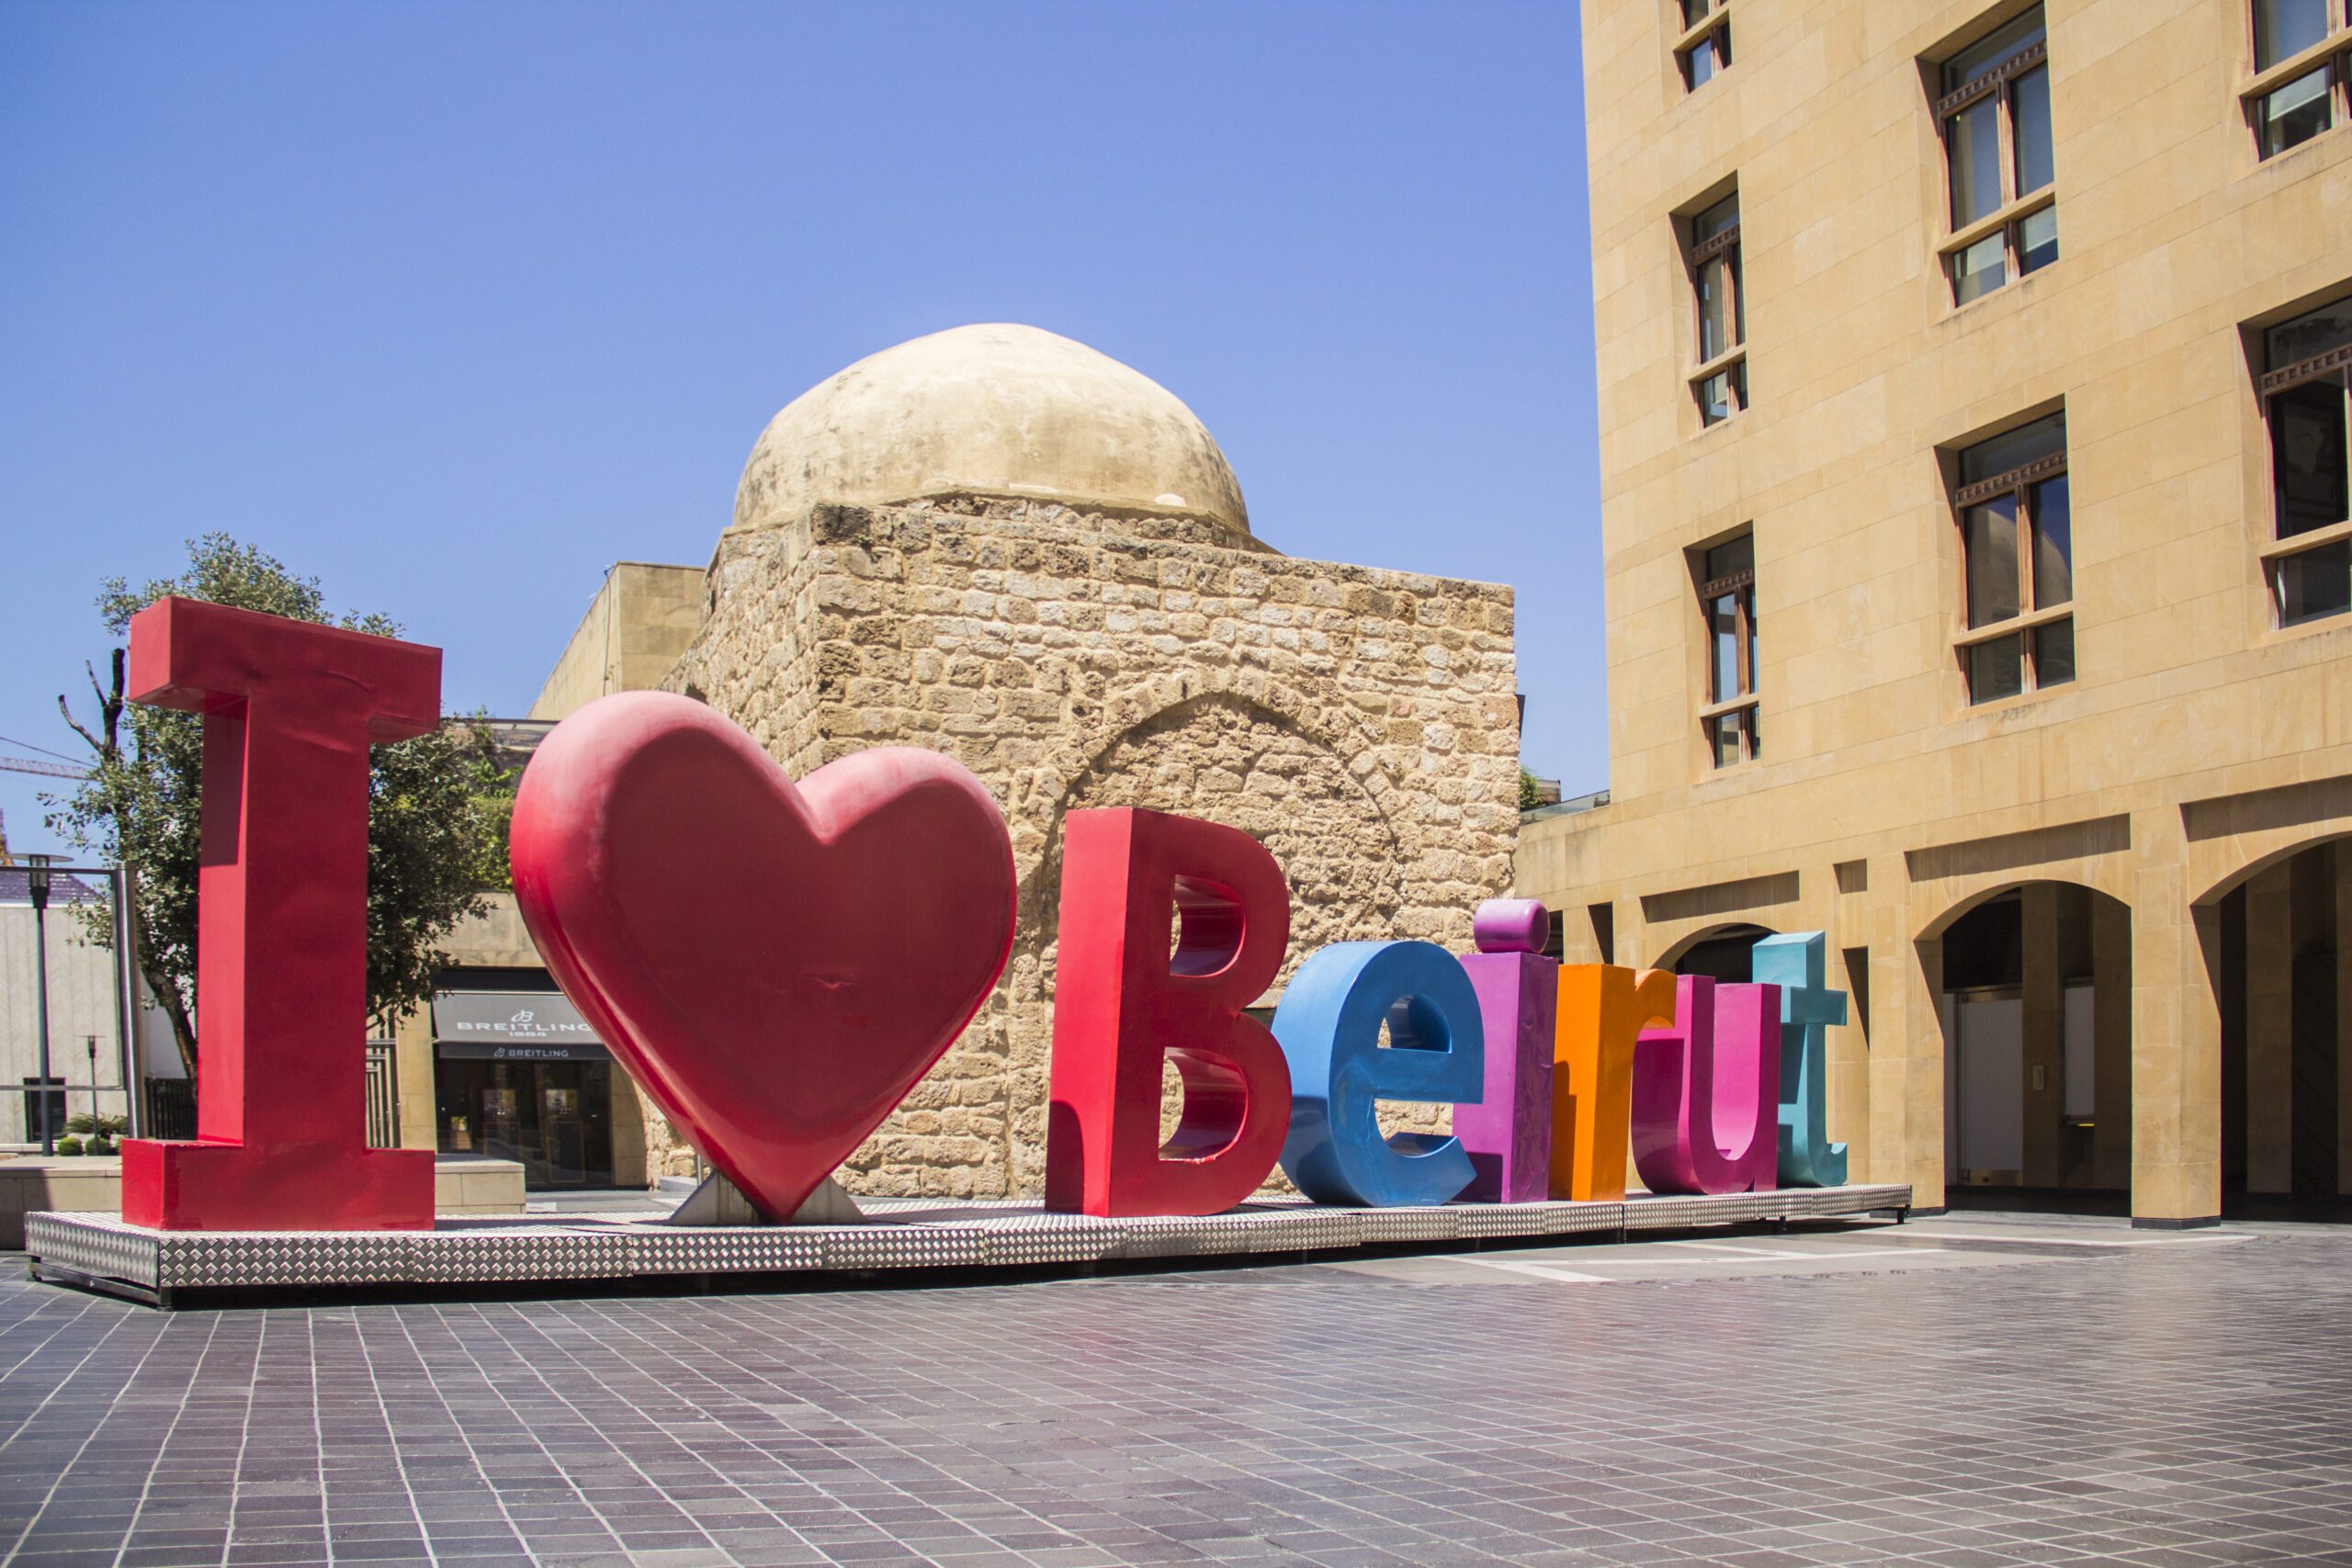 i-love-beirut-sign-downtown-beirut-lebanon